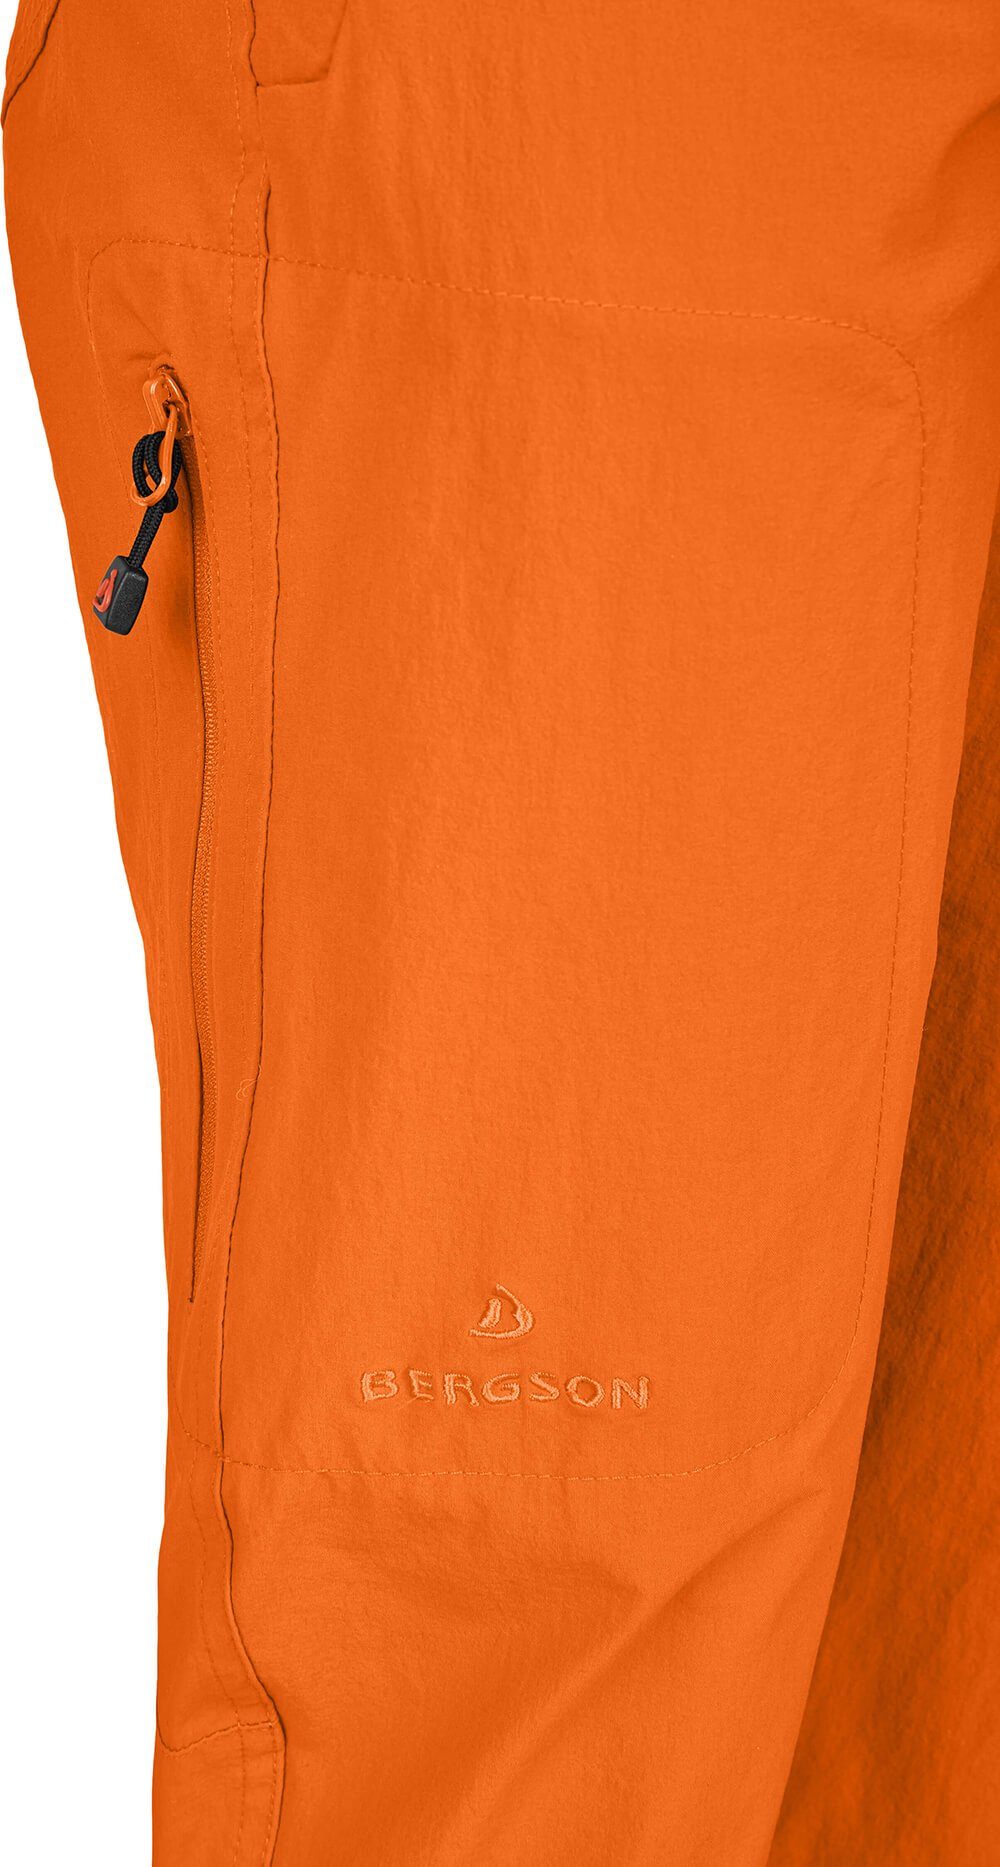 orange Capri 3/4 elastisch, Vario Normalgrößen, AKKA (slim) Damen Wanderhose, Outdoorhose Bergson sportlich, komfortabel,